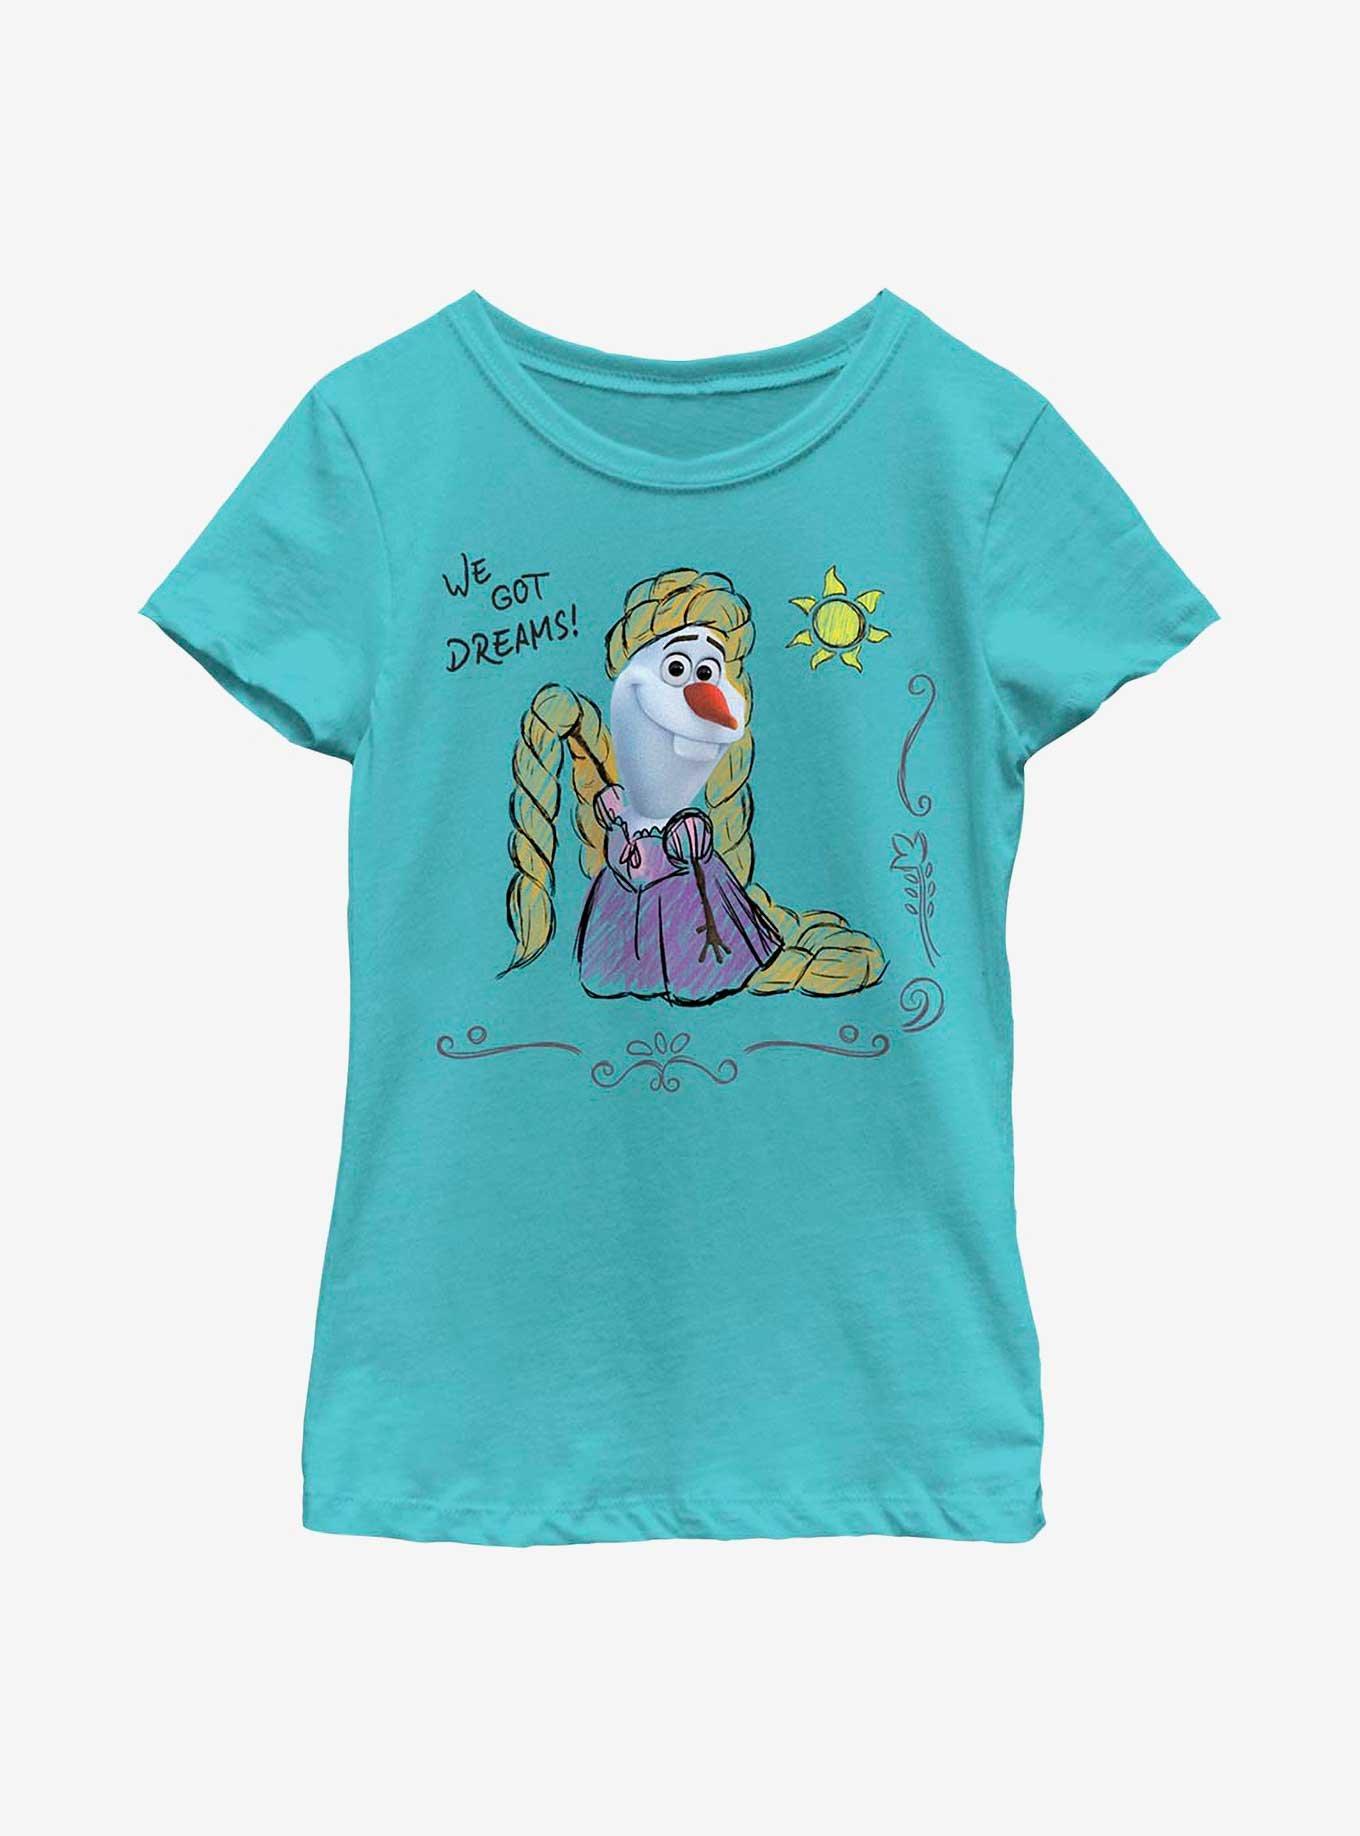 Disney Olaf Presents Rapunzel Outfit Youth Girls T-Shirt, TAHI BLUE, hi-res